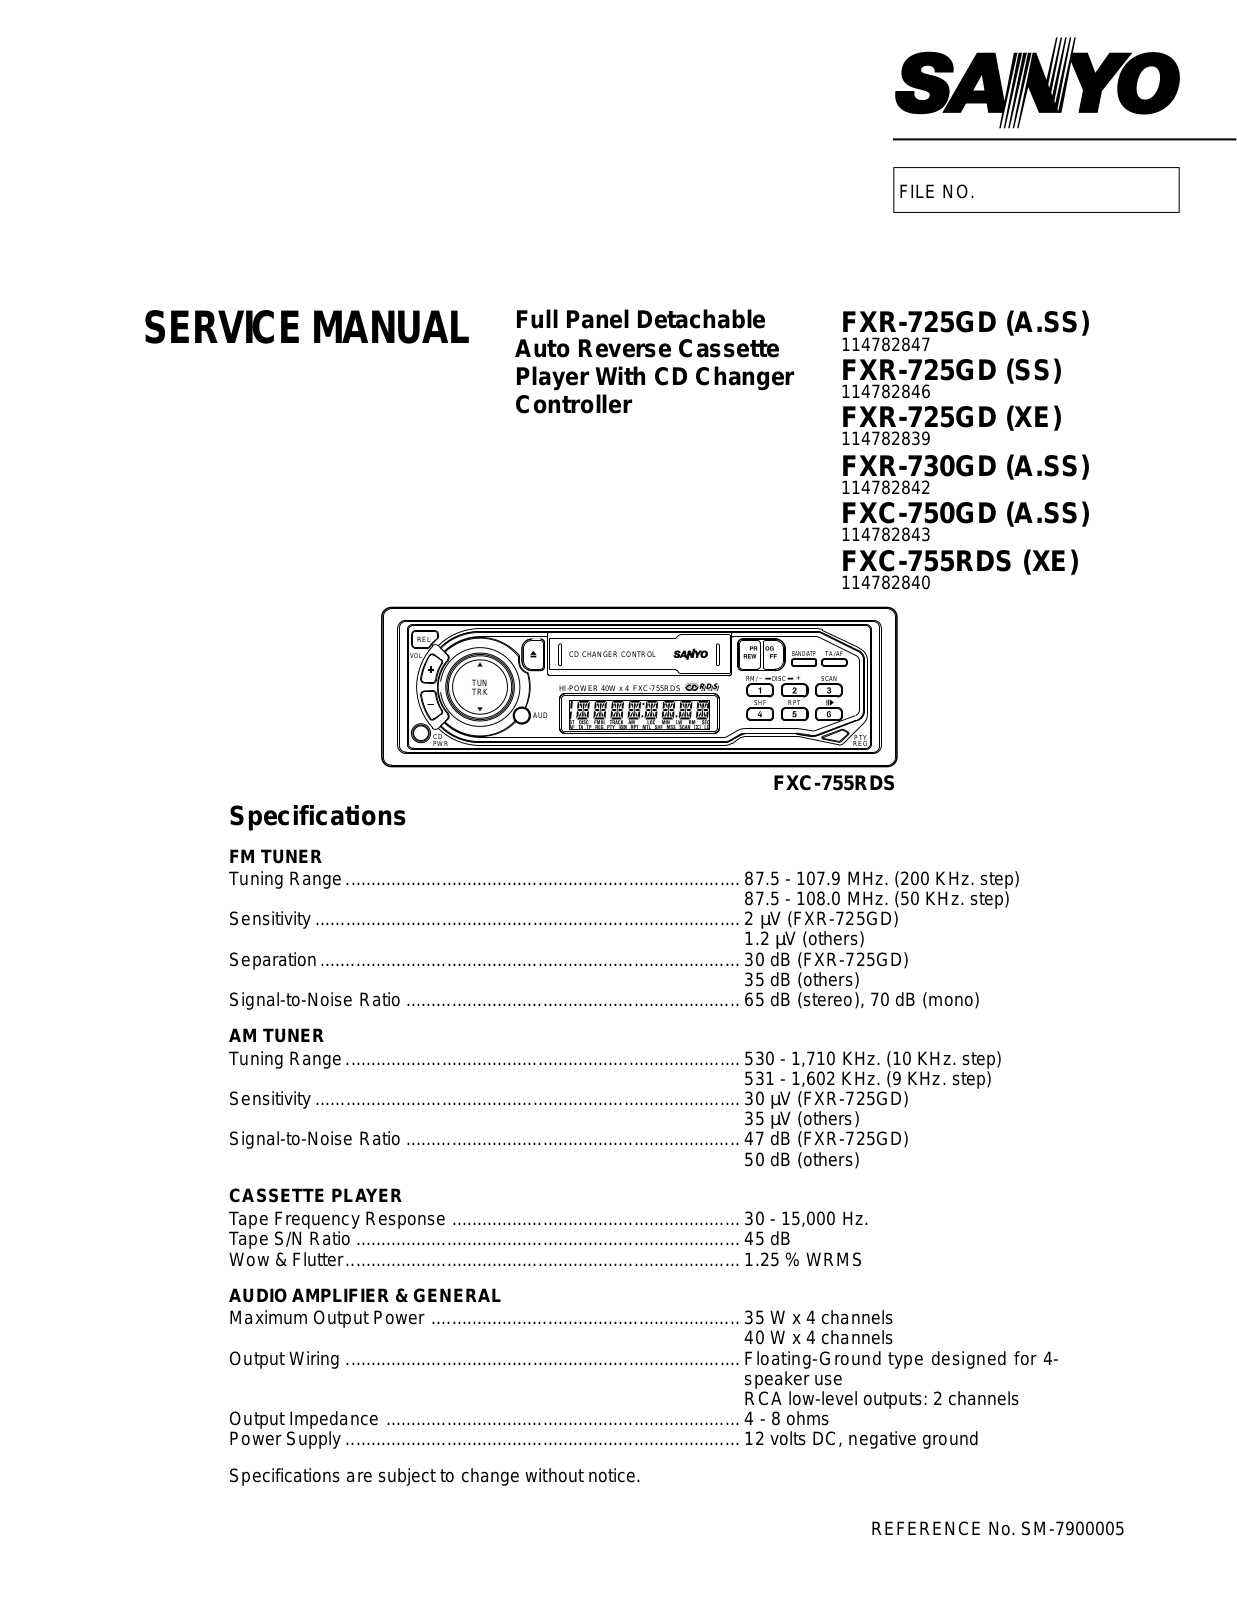 Sanyo FXR-725-GD, FXR-730-GD, FXR-750-GD, FXR-755-RDS Service manual